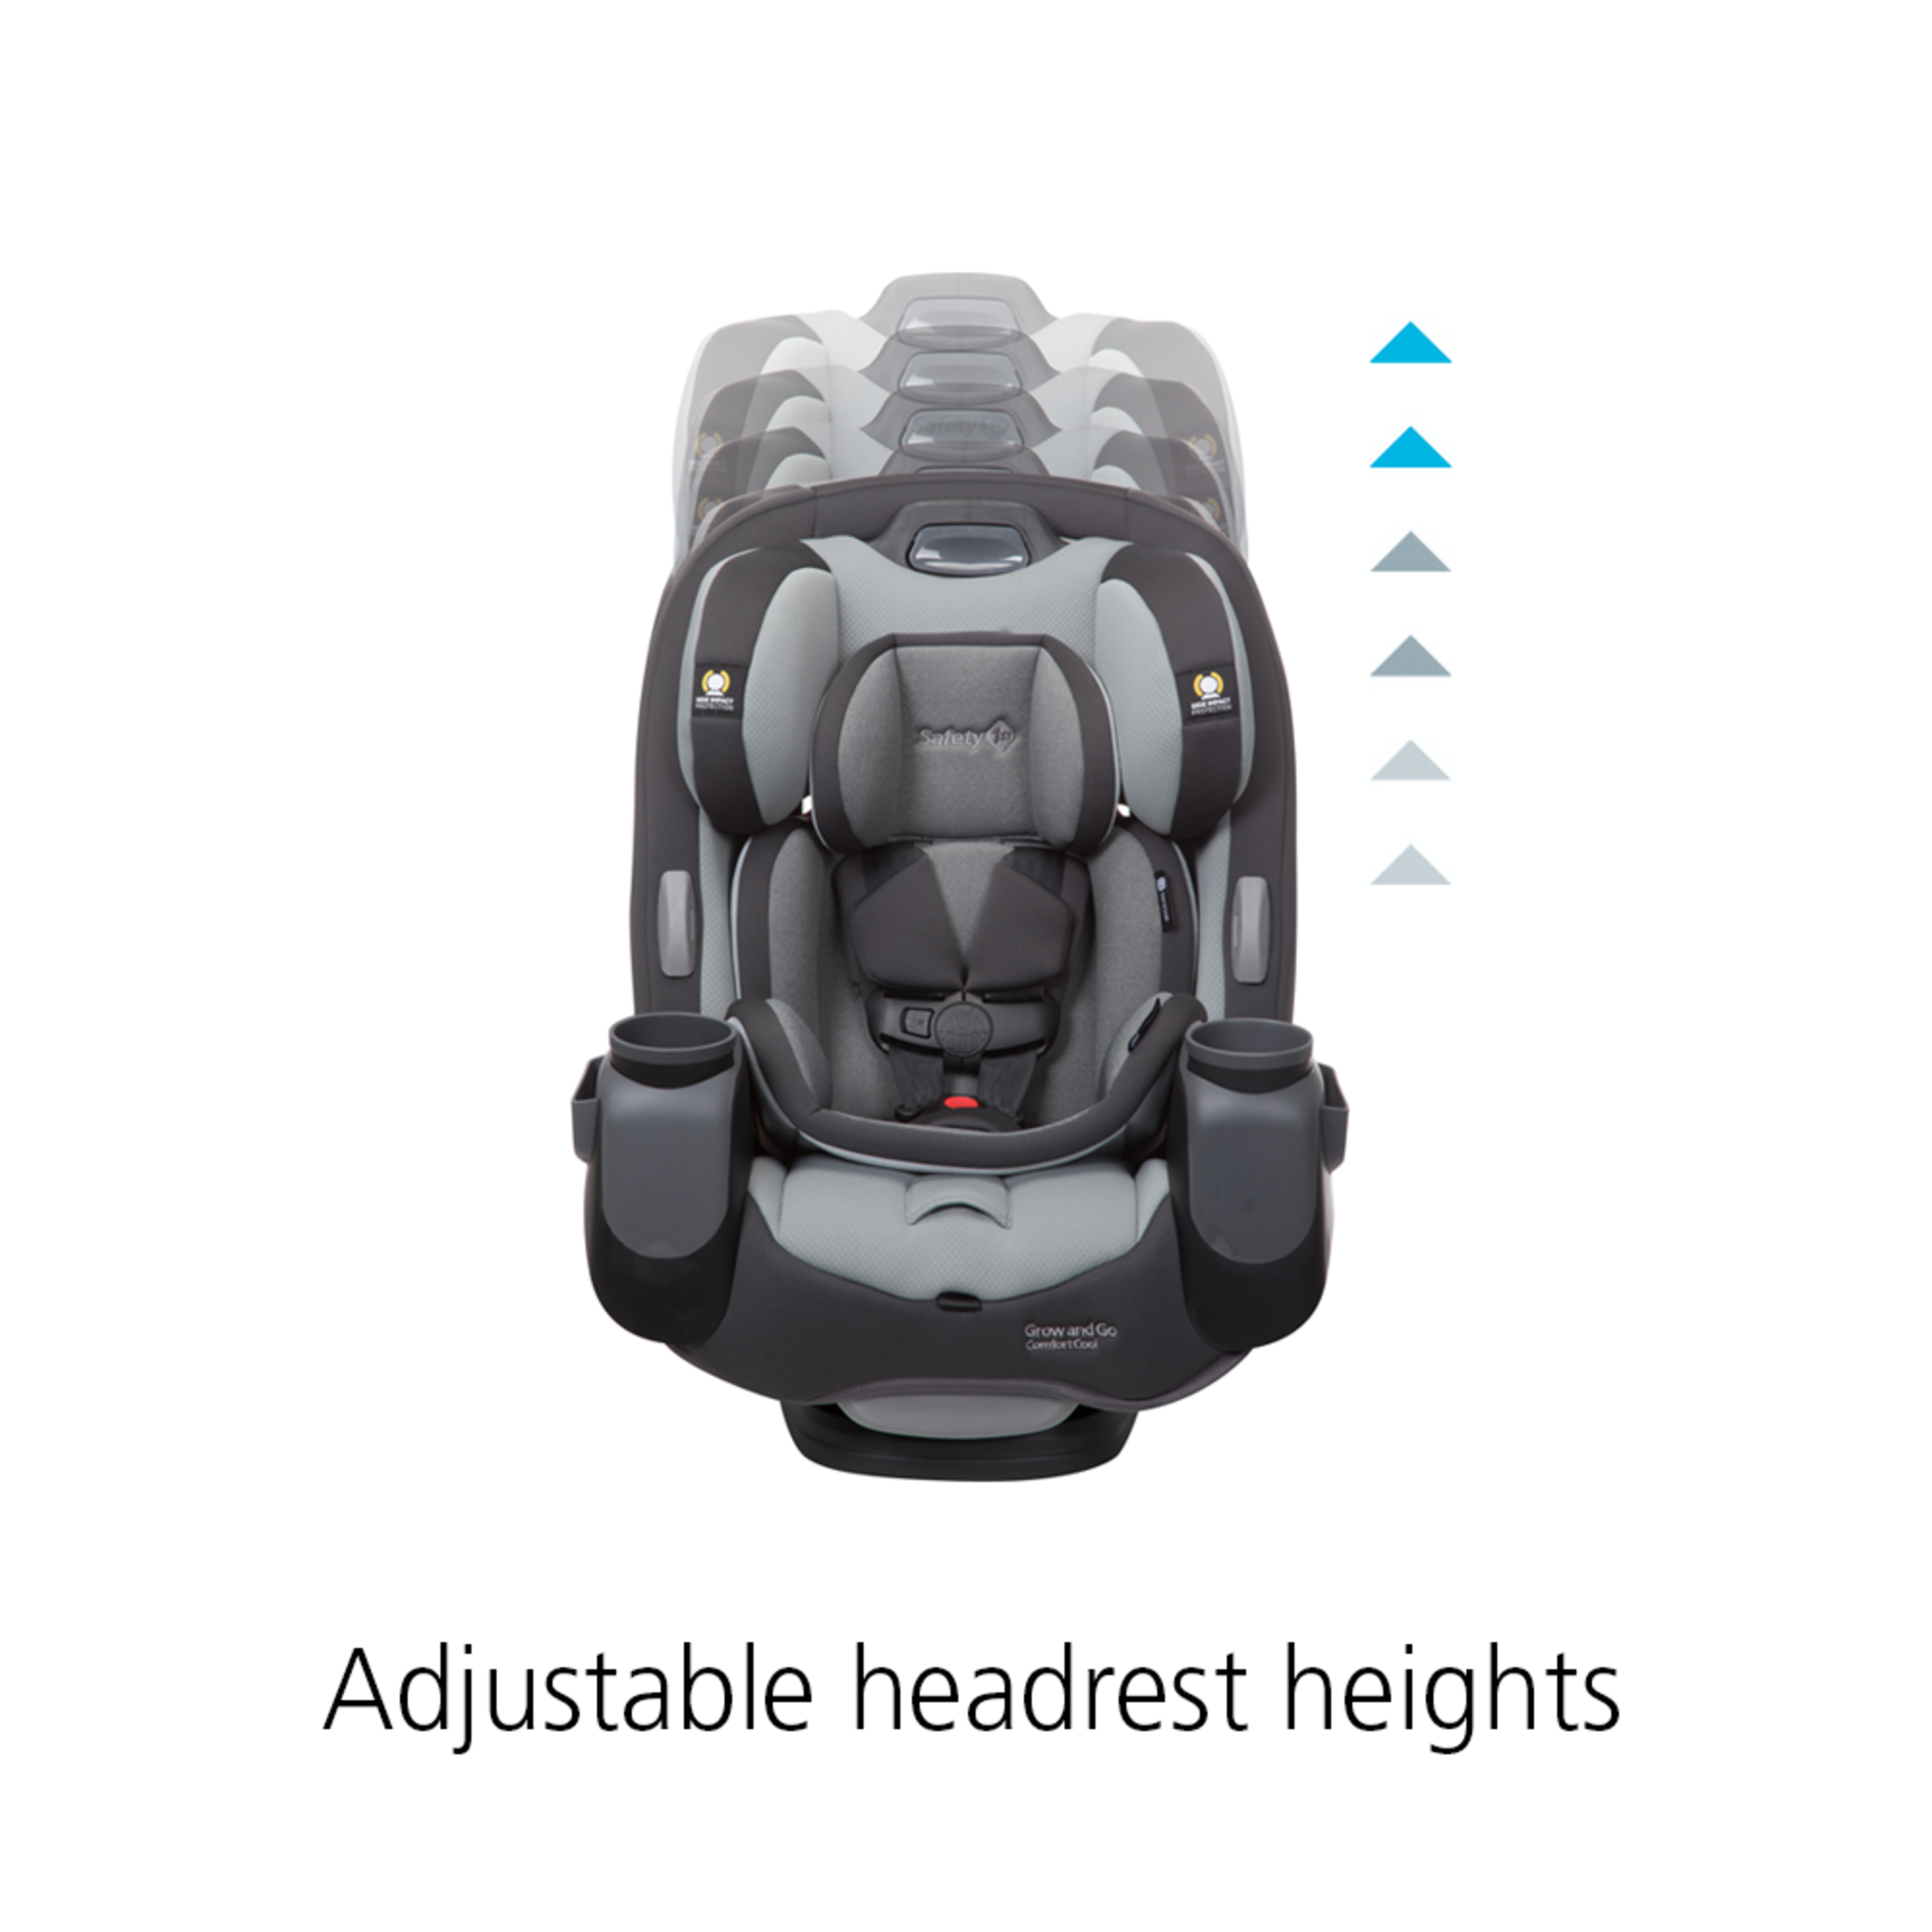 Adjustable headrest heights